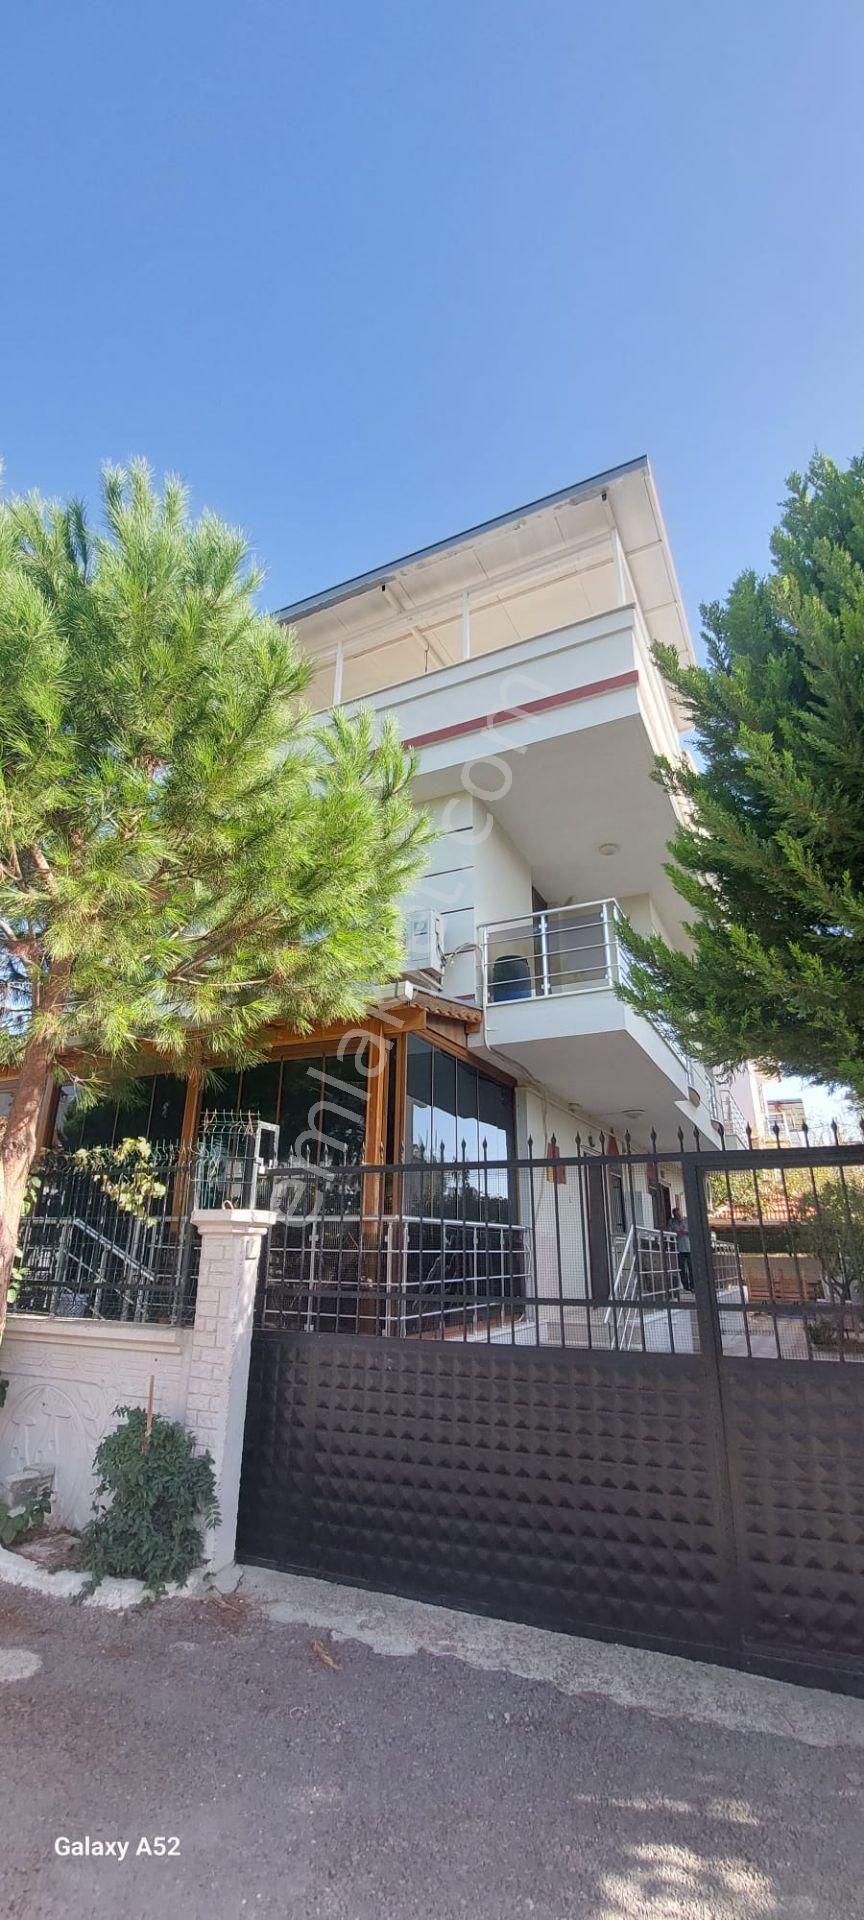 Menderes Barbaros Satılık Villa  MENDERES BARBAROS MAHALLESİNDE SAĞLAM GAYRİMENKULDEN SATILIK 4+1 VİLLA